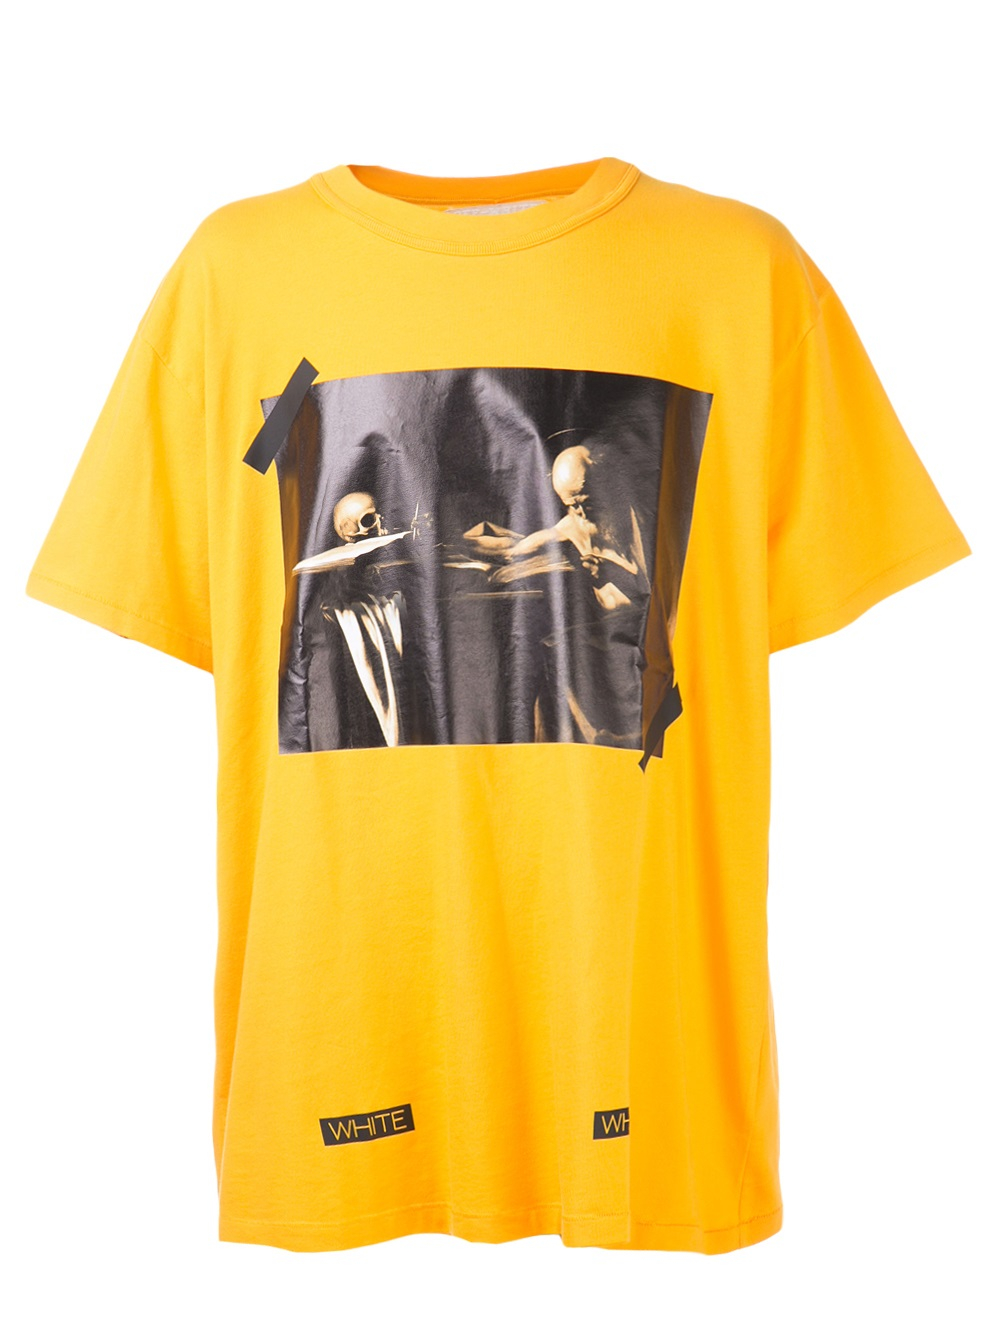 Off-White c/o Virgil Abloh Front Graphic T-Shirt in Orange for Men - Lyst